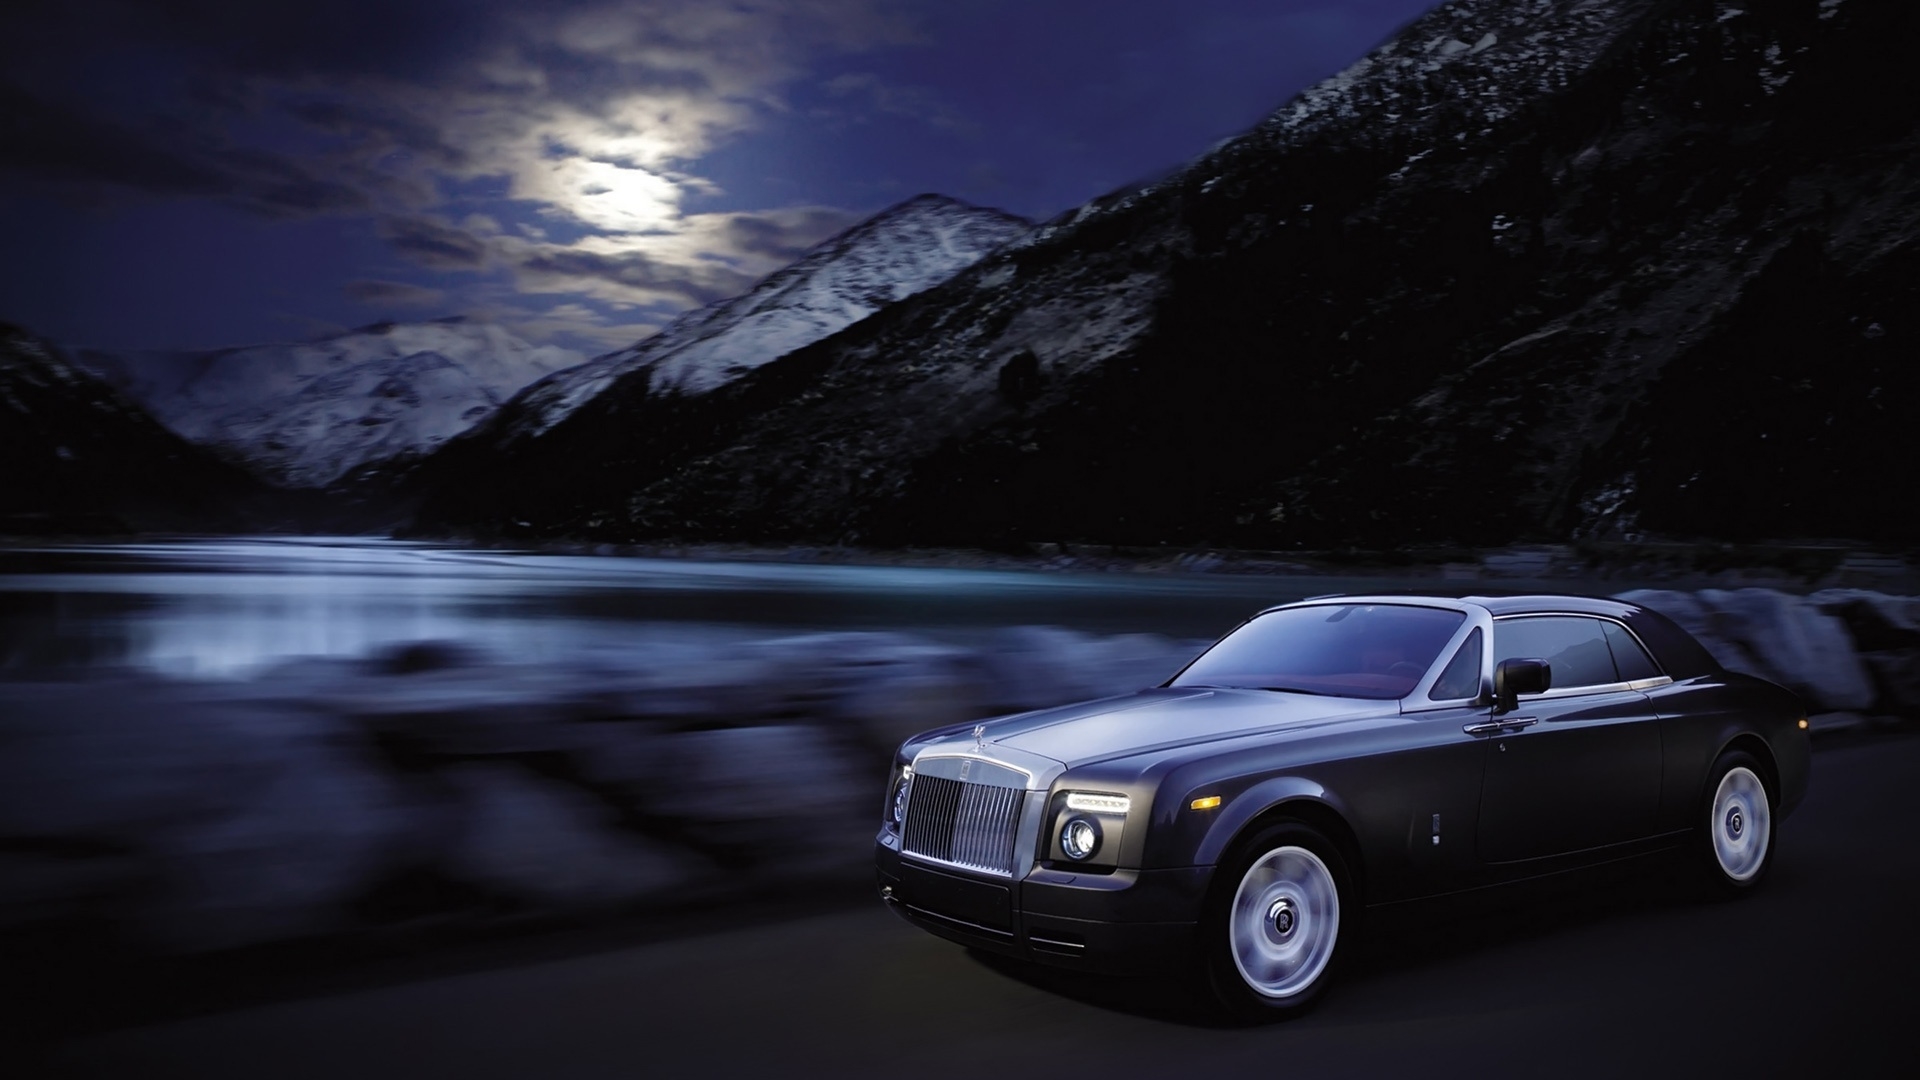 Rolls Royce Phantom Coupe Night 2010 for 1920 x 1080 HDTV 1080p resolution